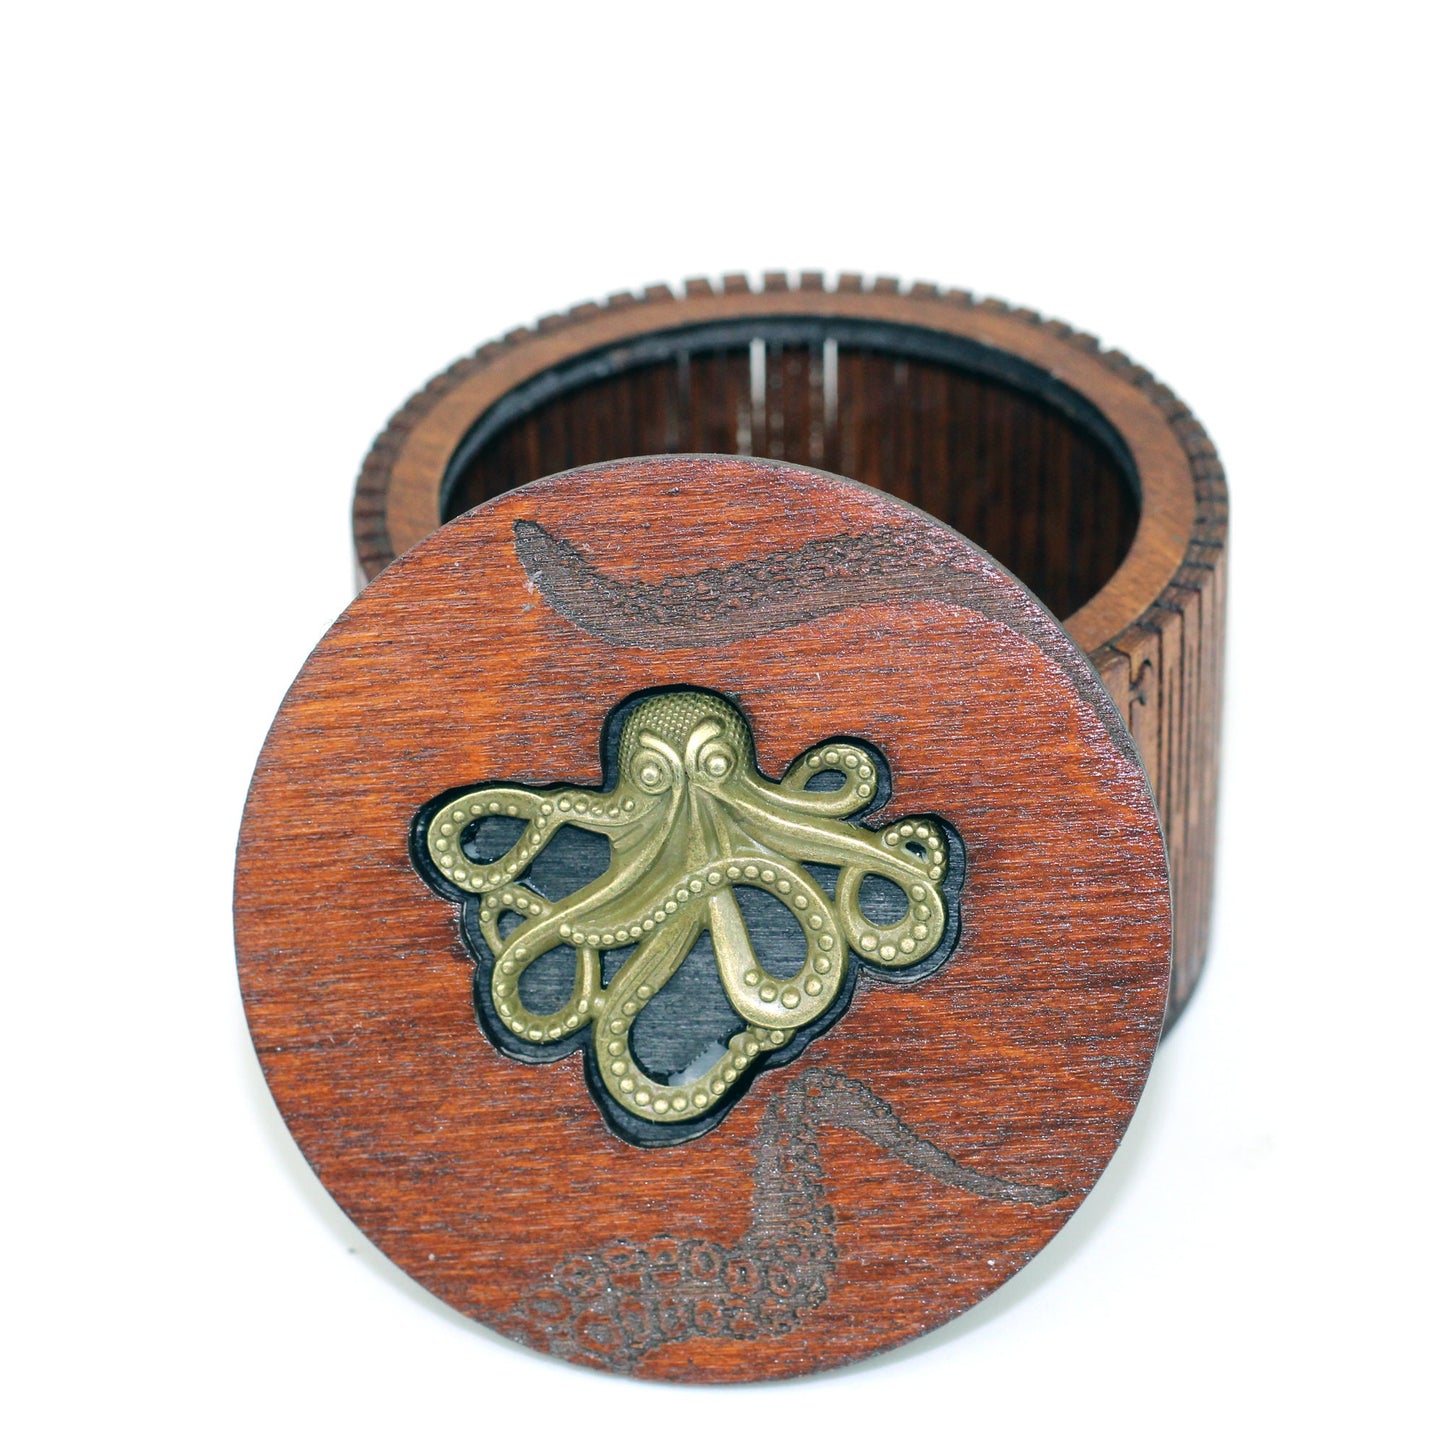 Kraken Charm Design Personalised wooden keepsake box with living hinge side, a gothic jewellery box, Victorian style custom wood trinket